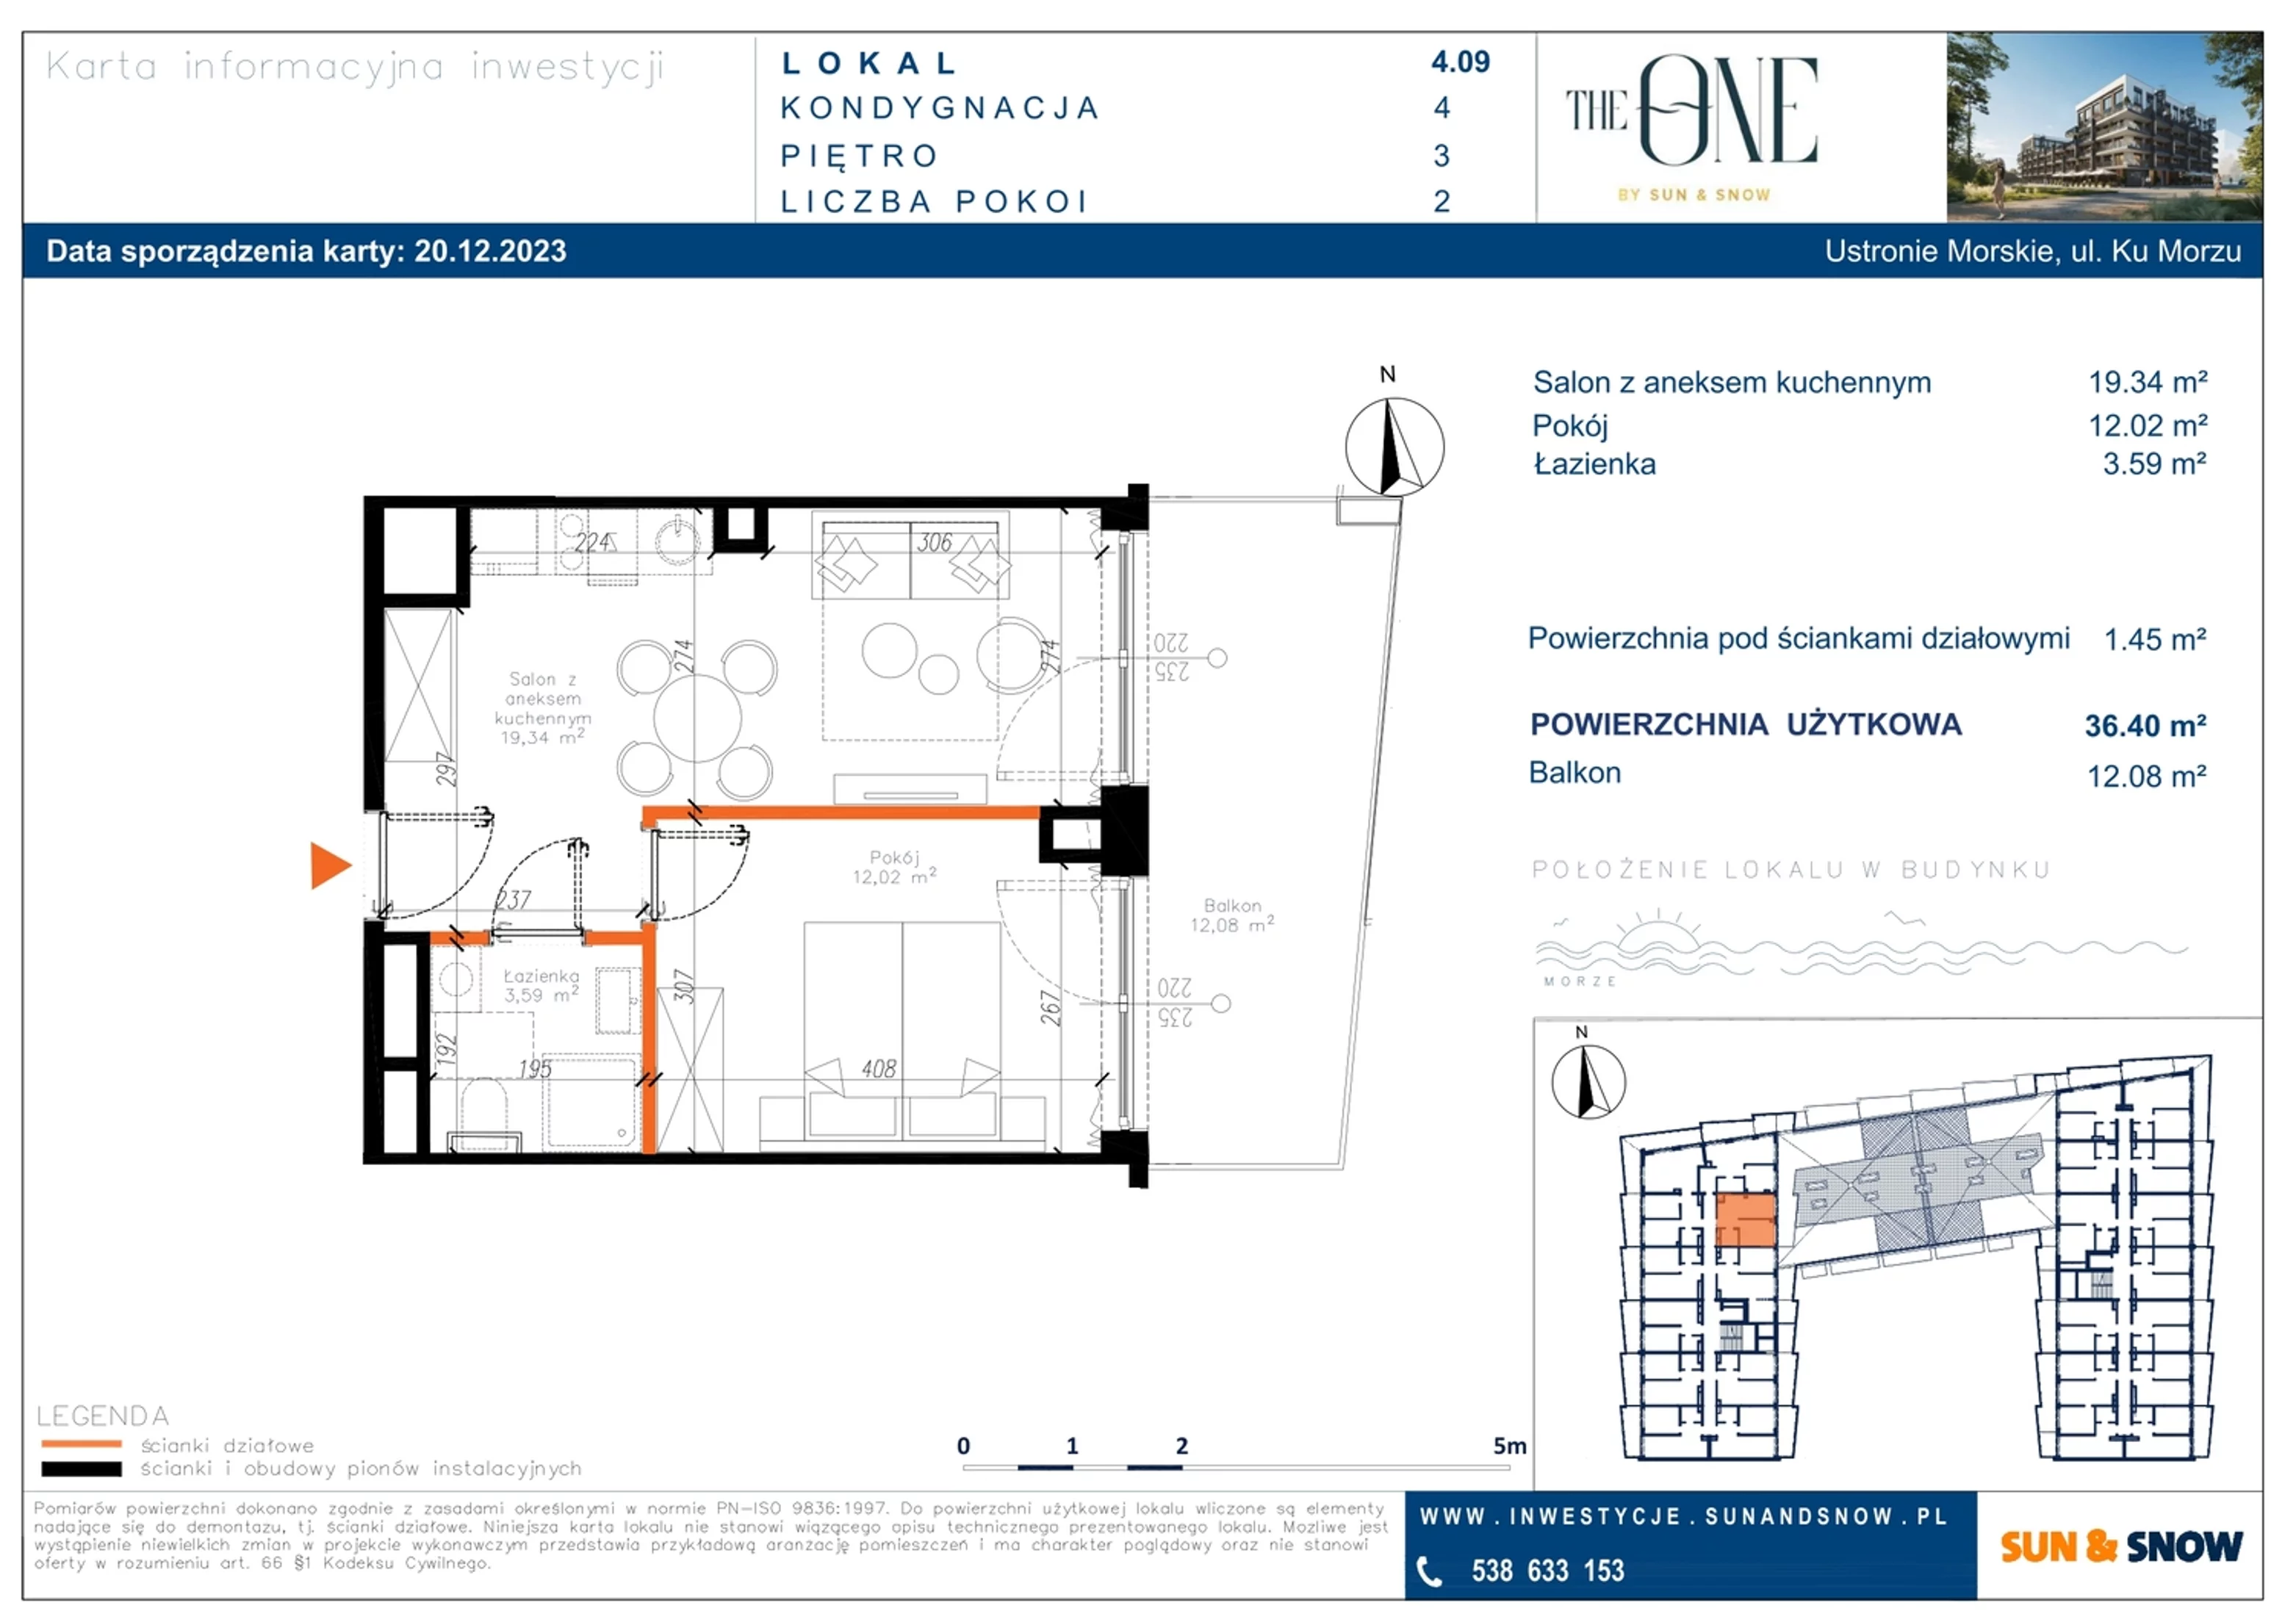 Apartament 36,40 m², piętro 3, oferta nr M/4/09, The One, Ustronie Morskie, ul. Ku Morzu 4